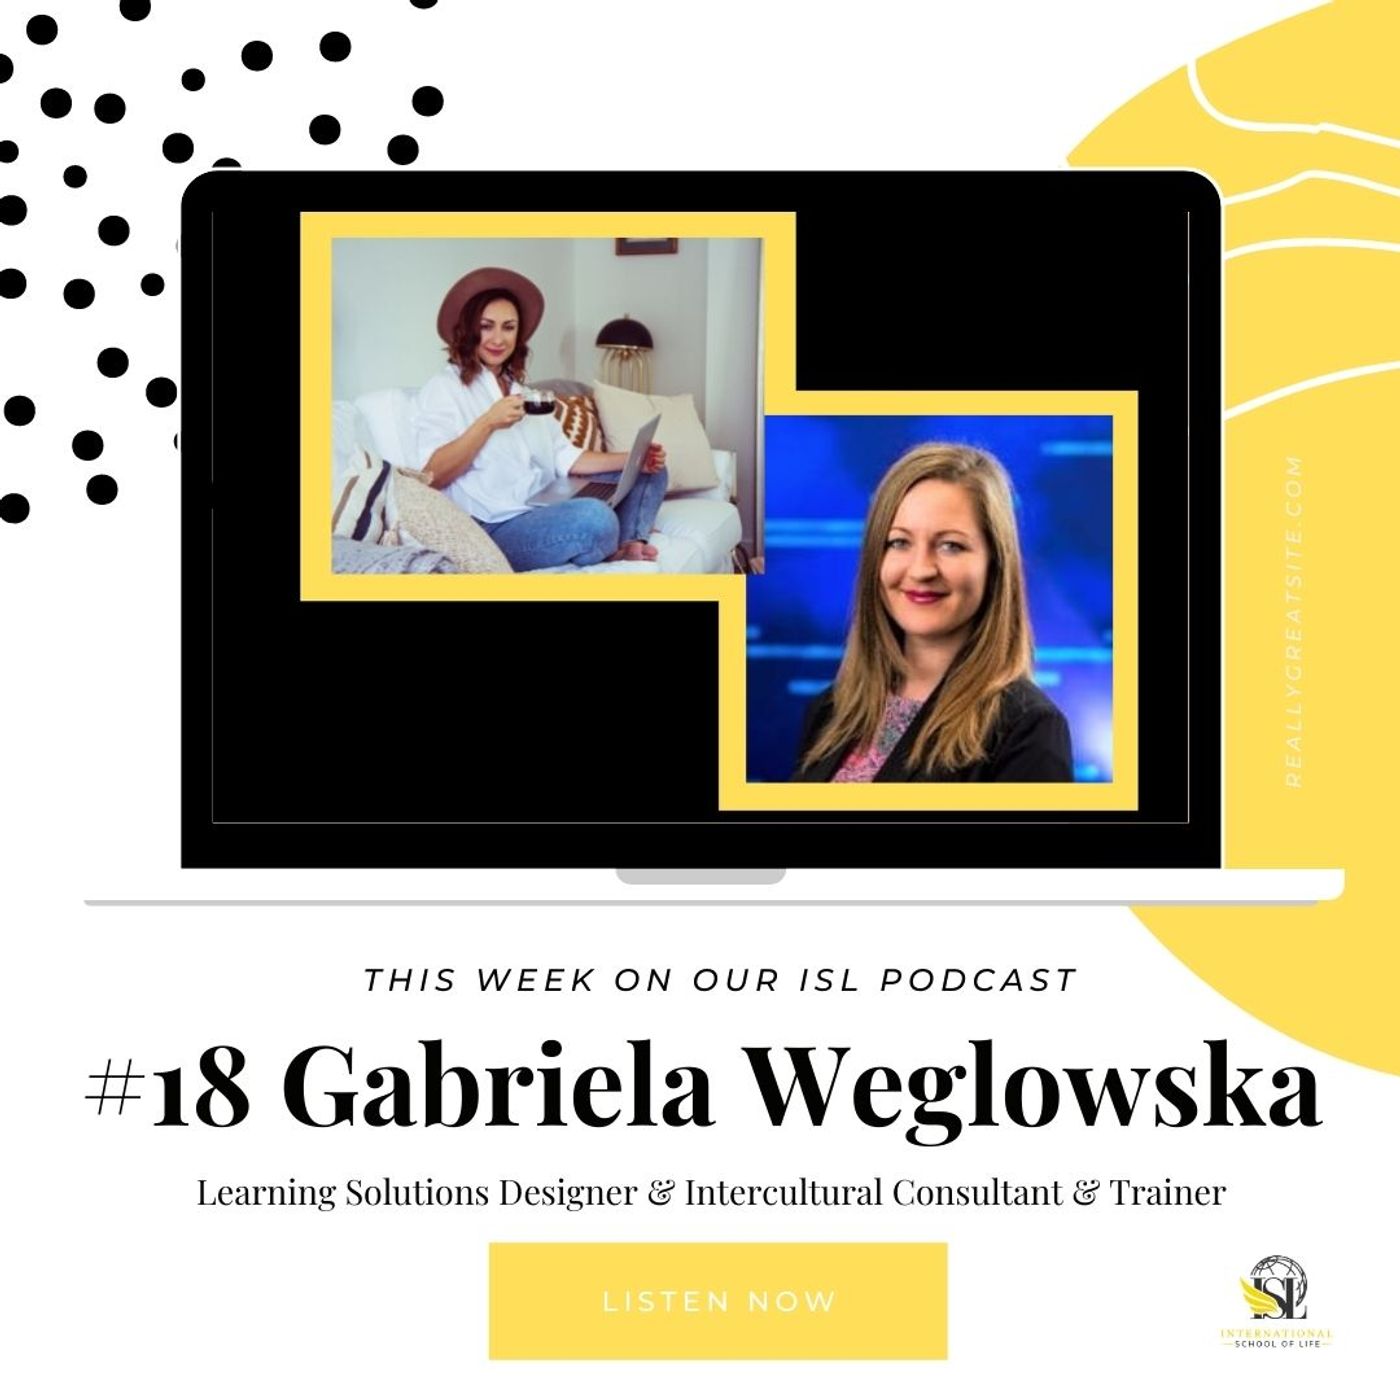 #18 Conversation with Gabriela Weglowska - Learning Solutions Designer & Intercultural Consultant